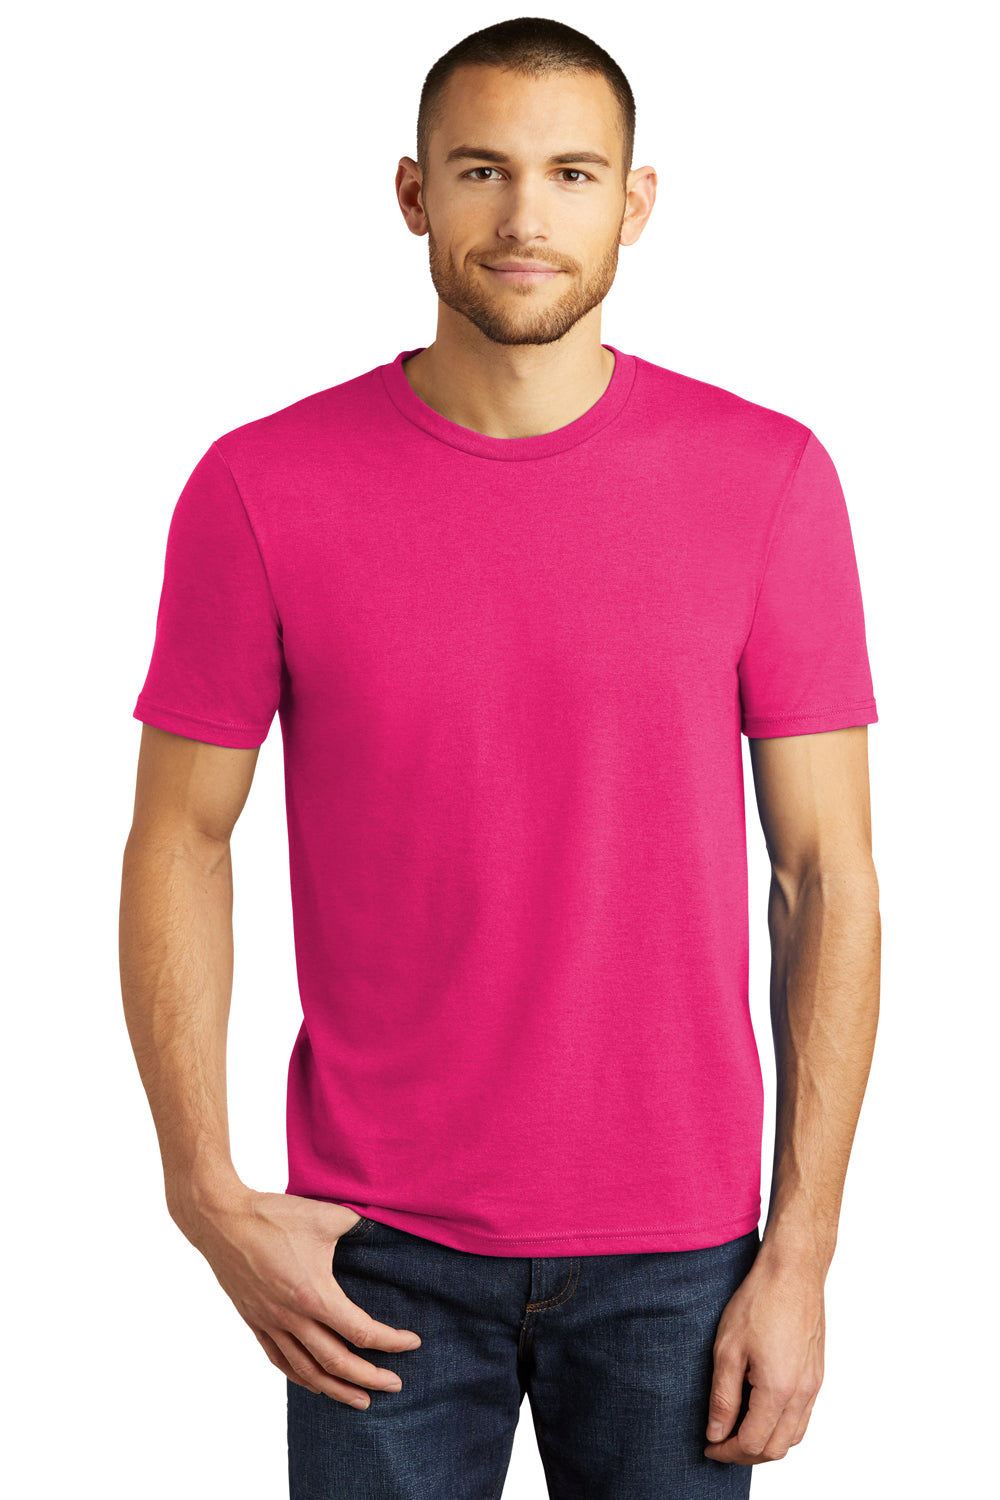 District DM130 Mens Perfect Tri Short Sleeve Crewneck T-Shirt Fuchsia Pink Frost Front